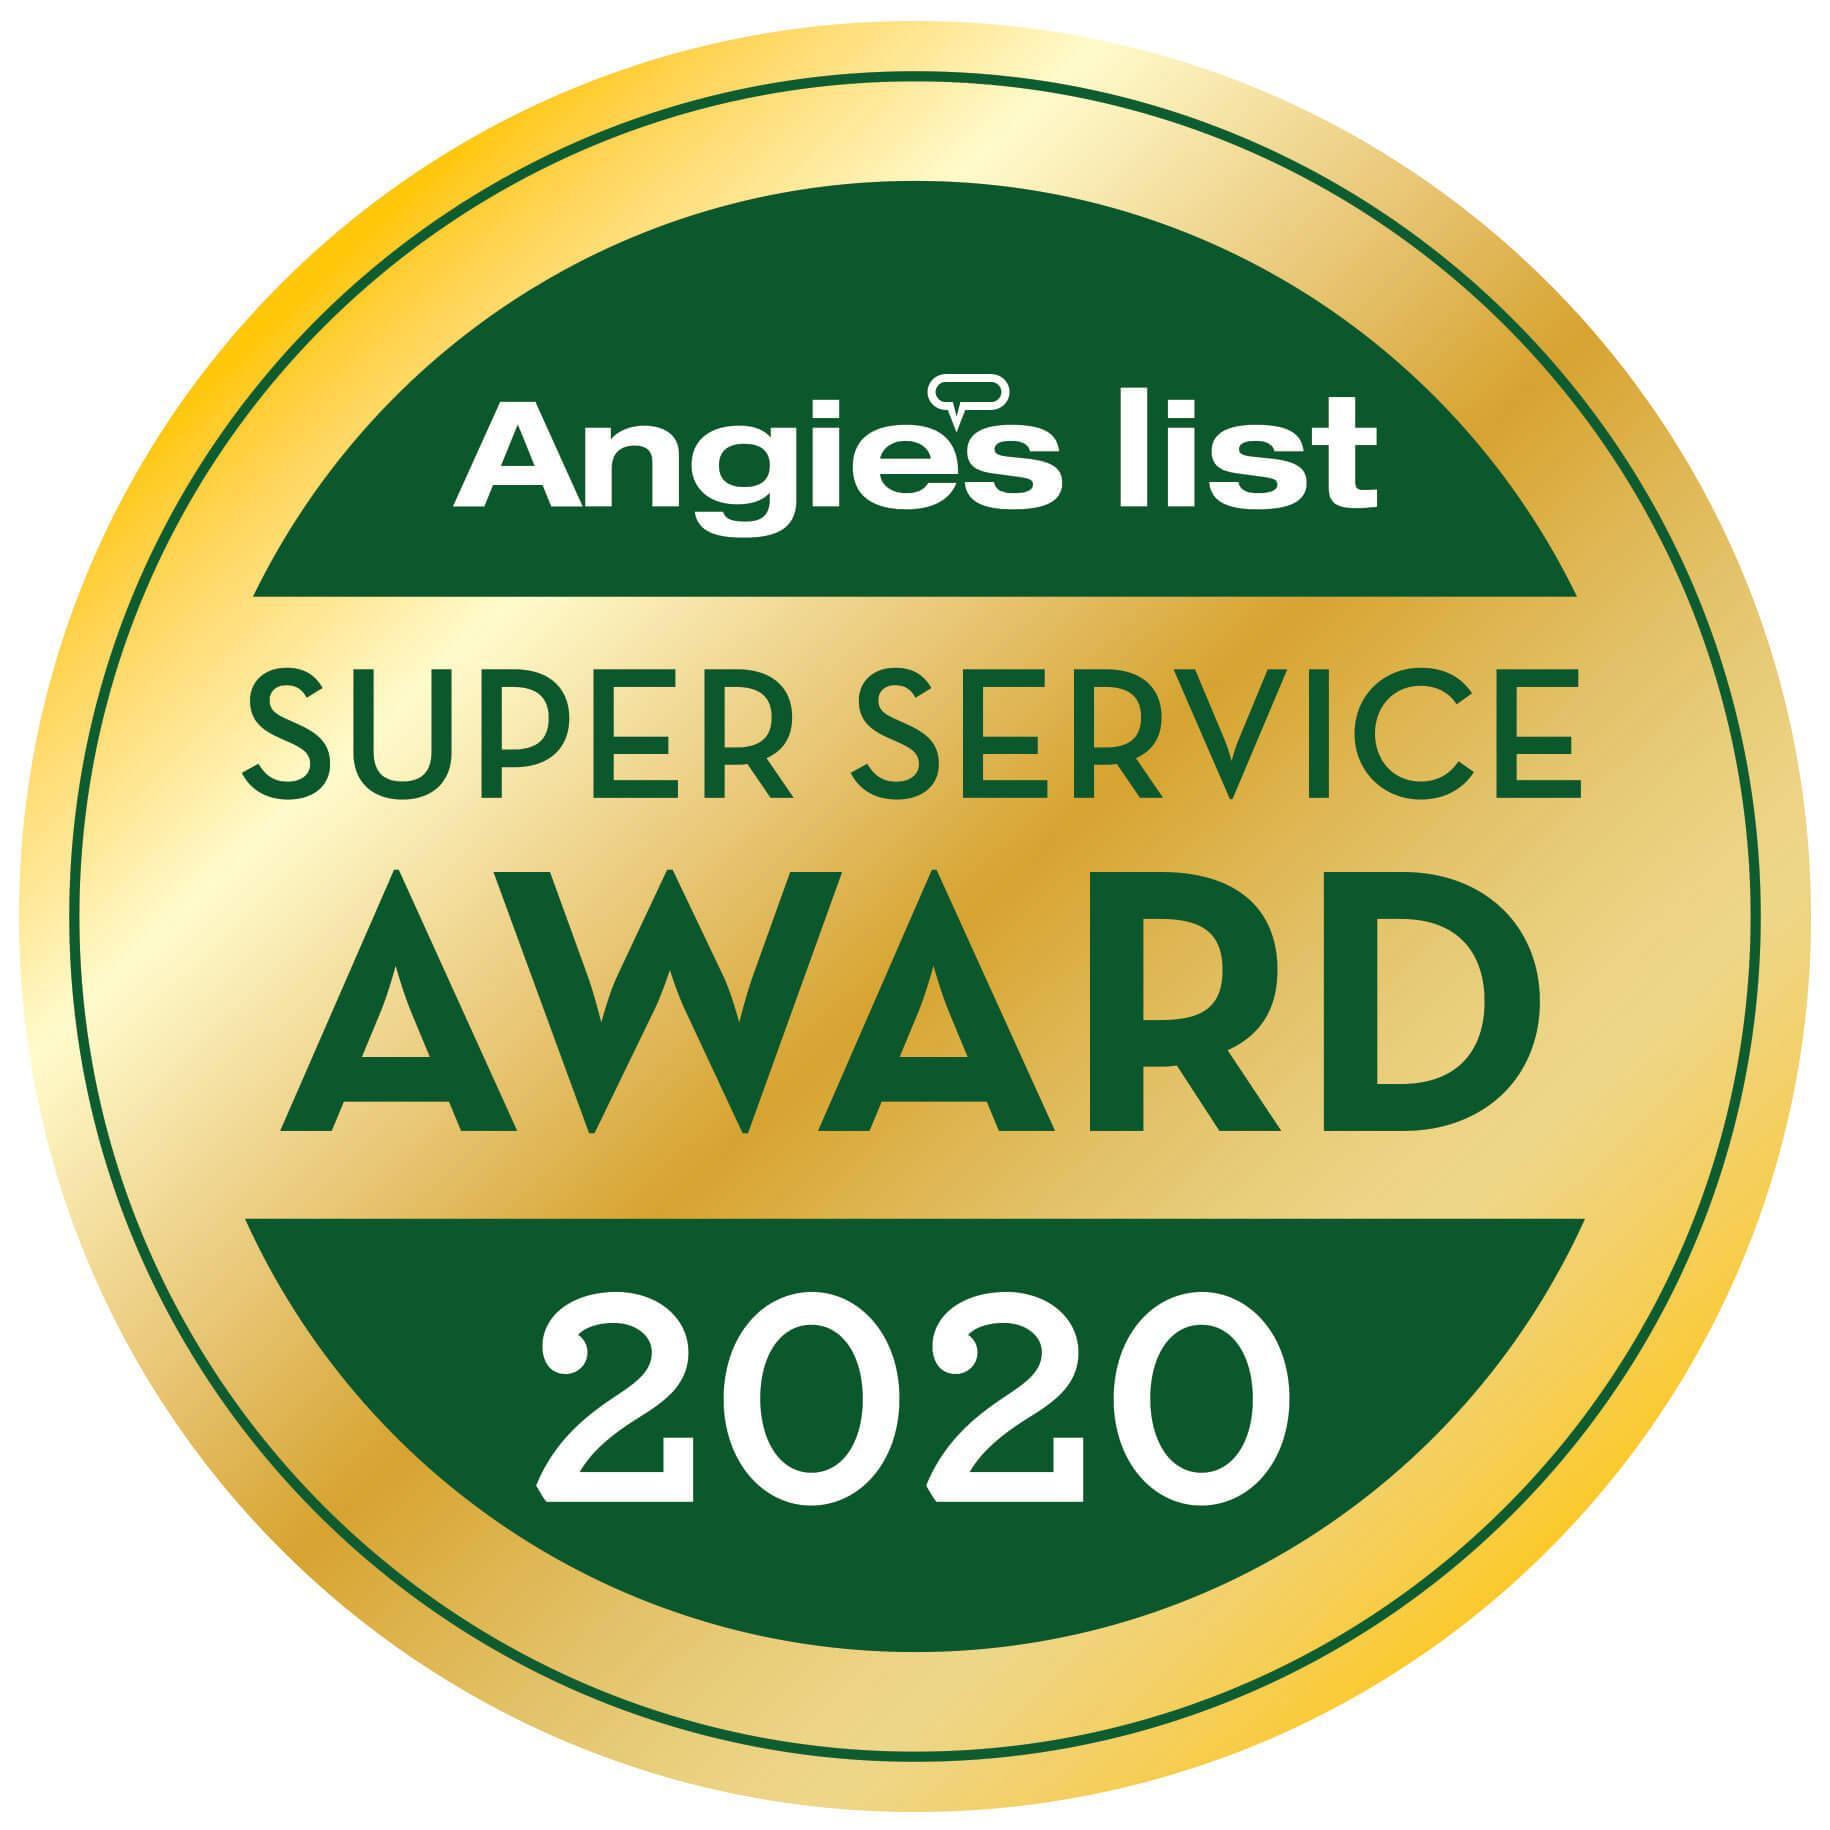 angies-list-super-service-award-winner-in-Everett